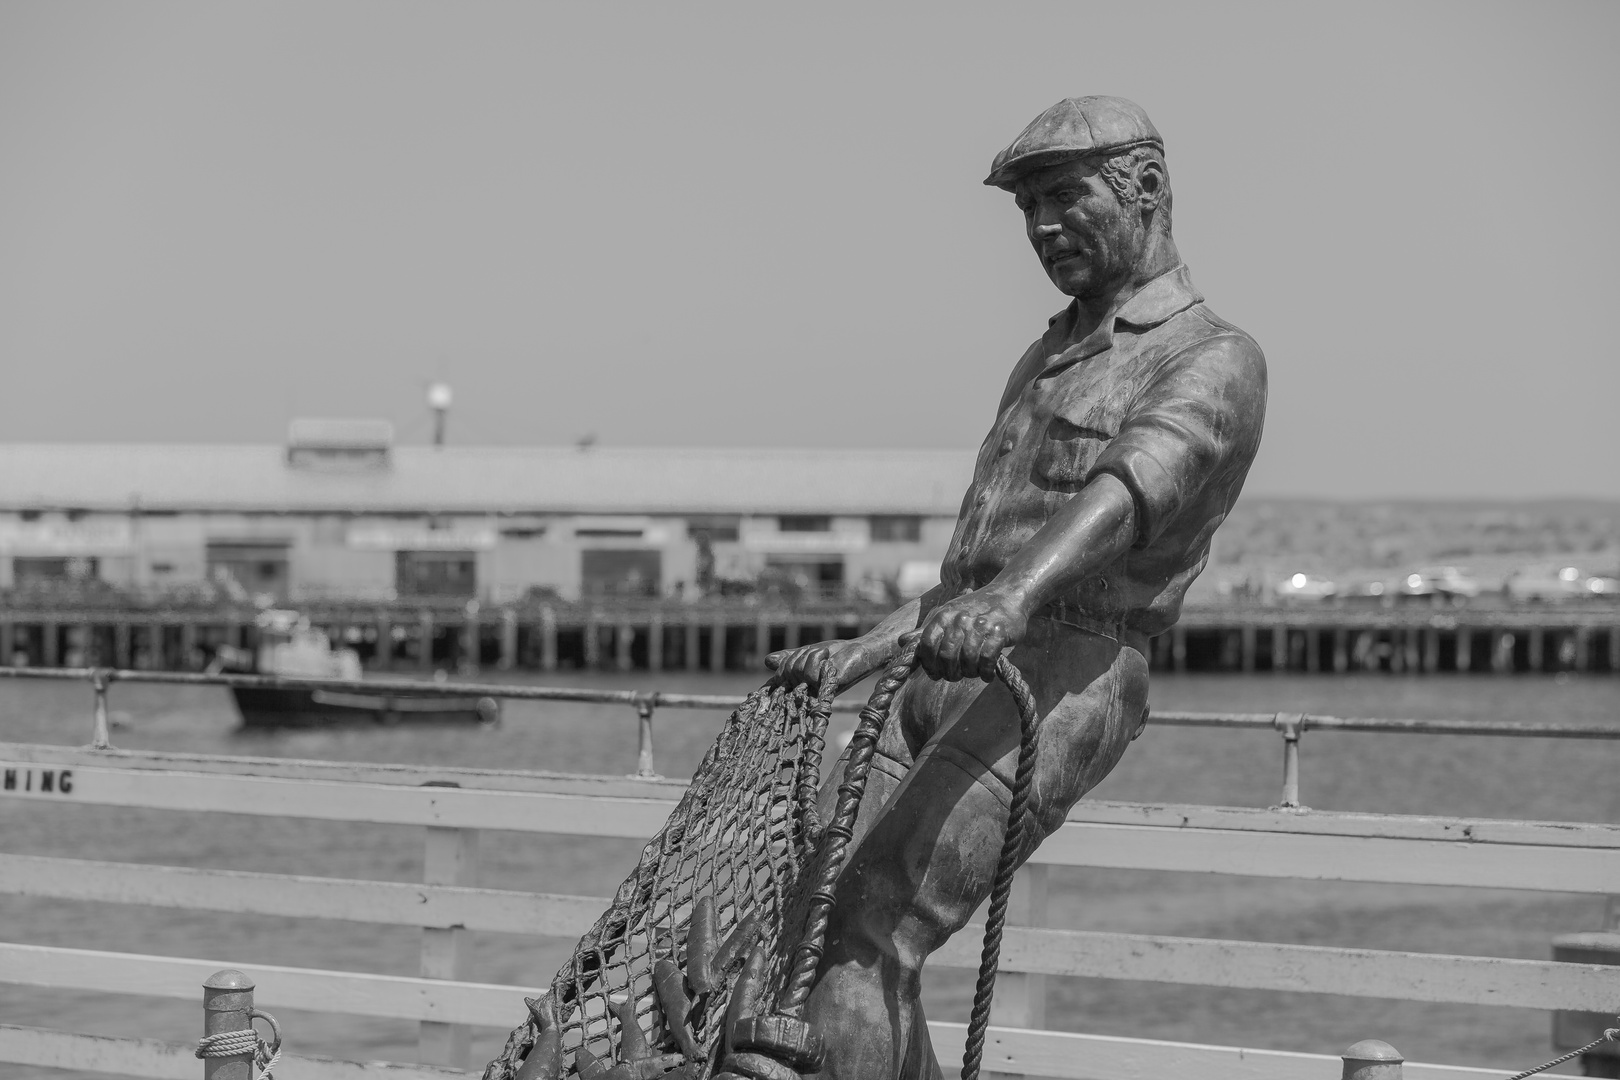 Monterey fisherman